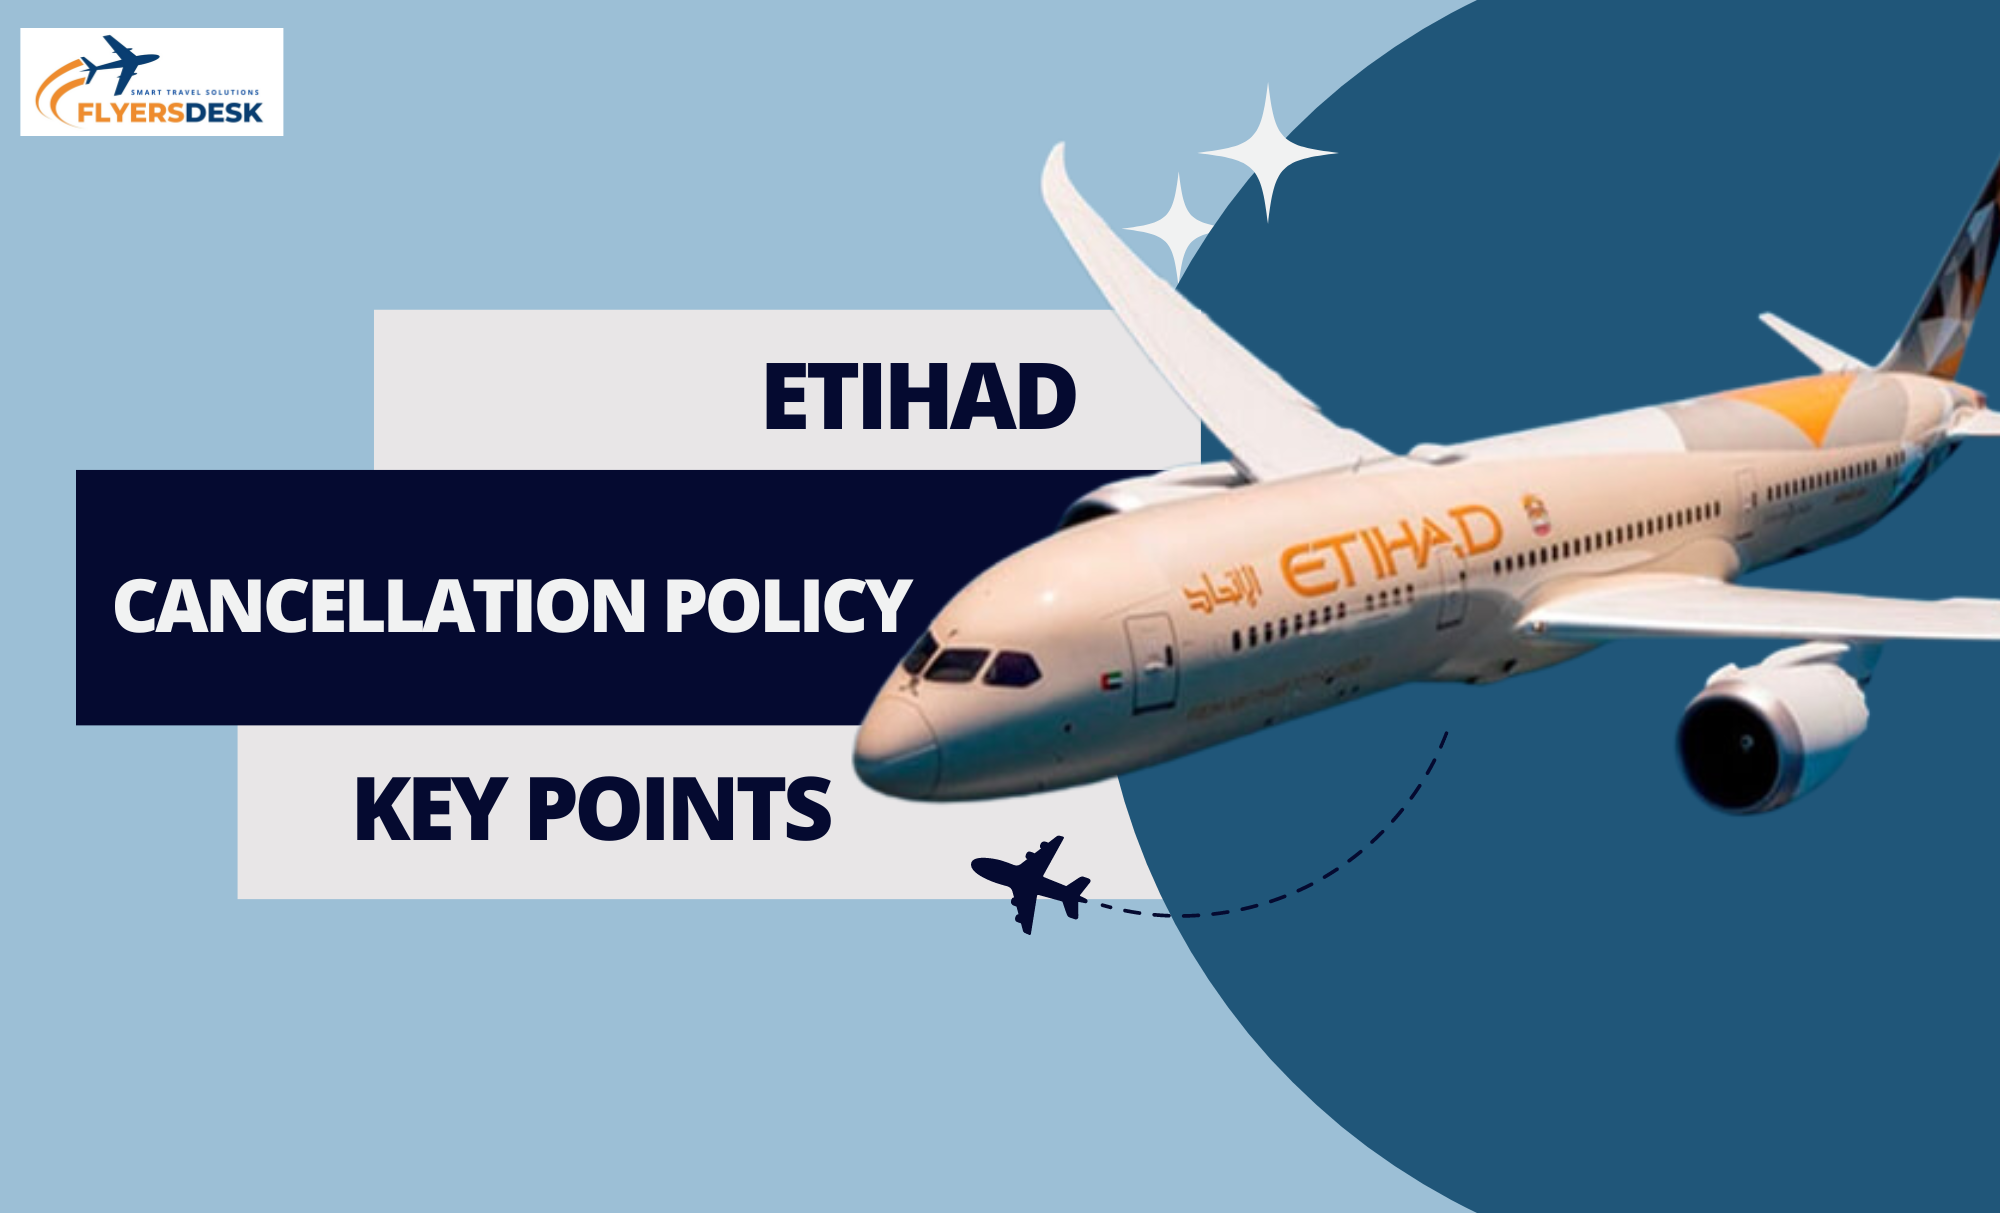 etihad cancellation policy key points